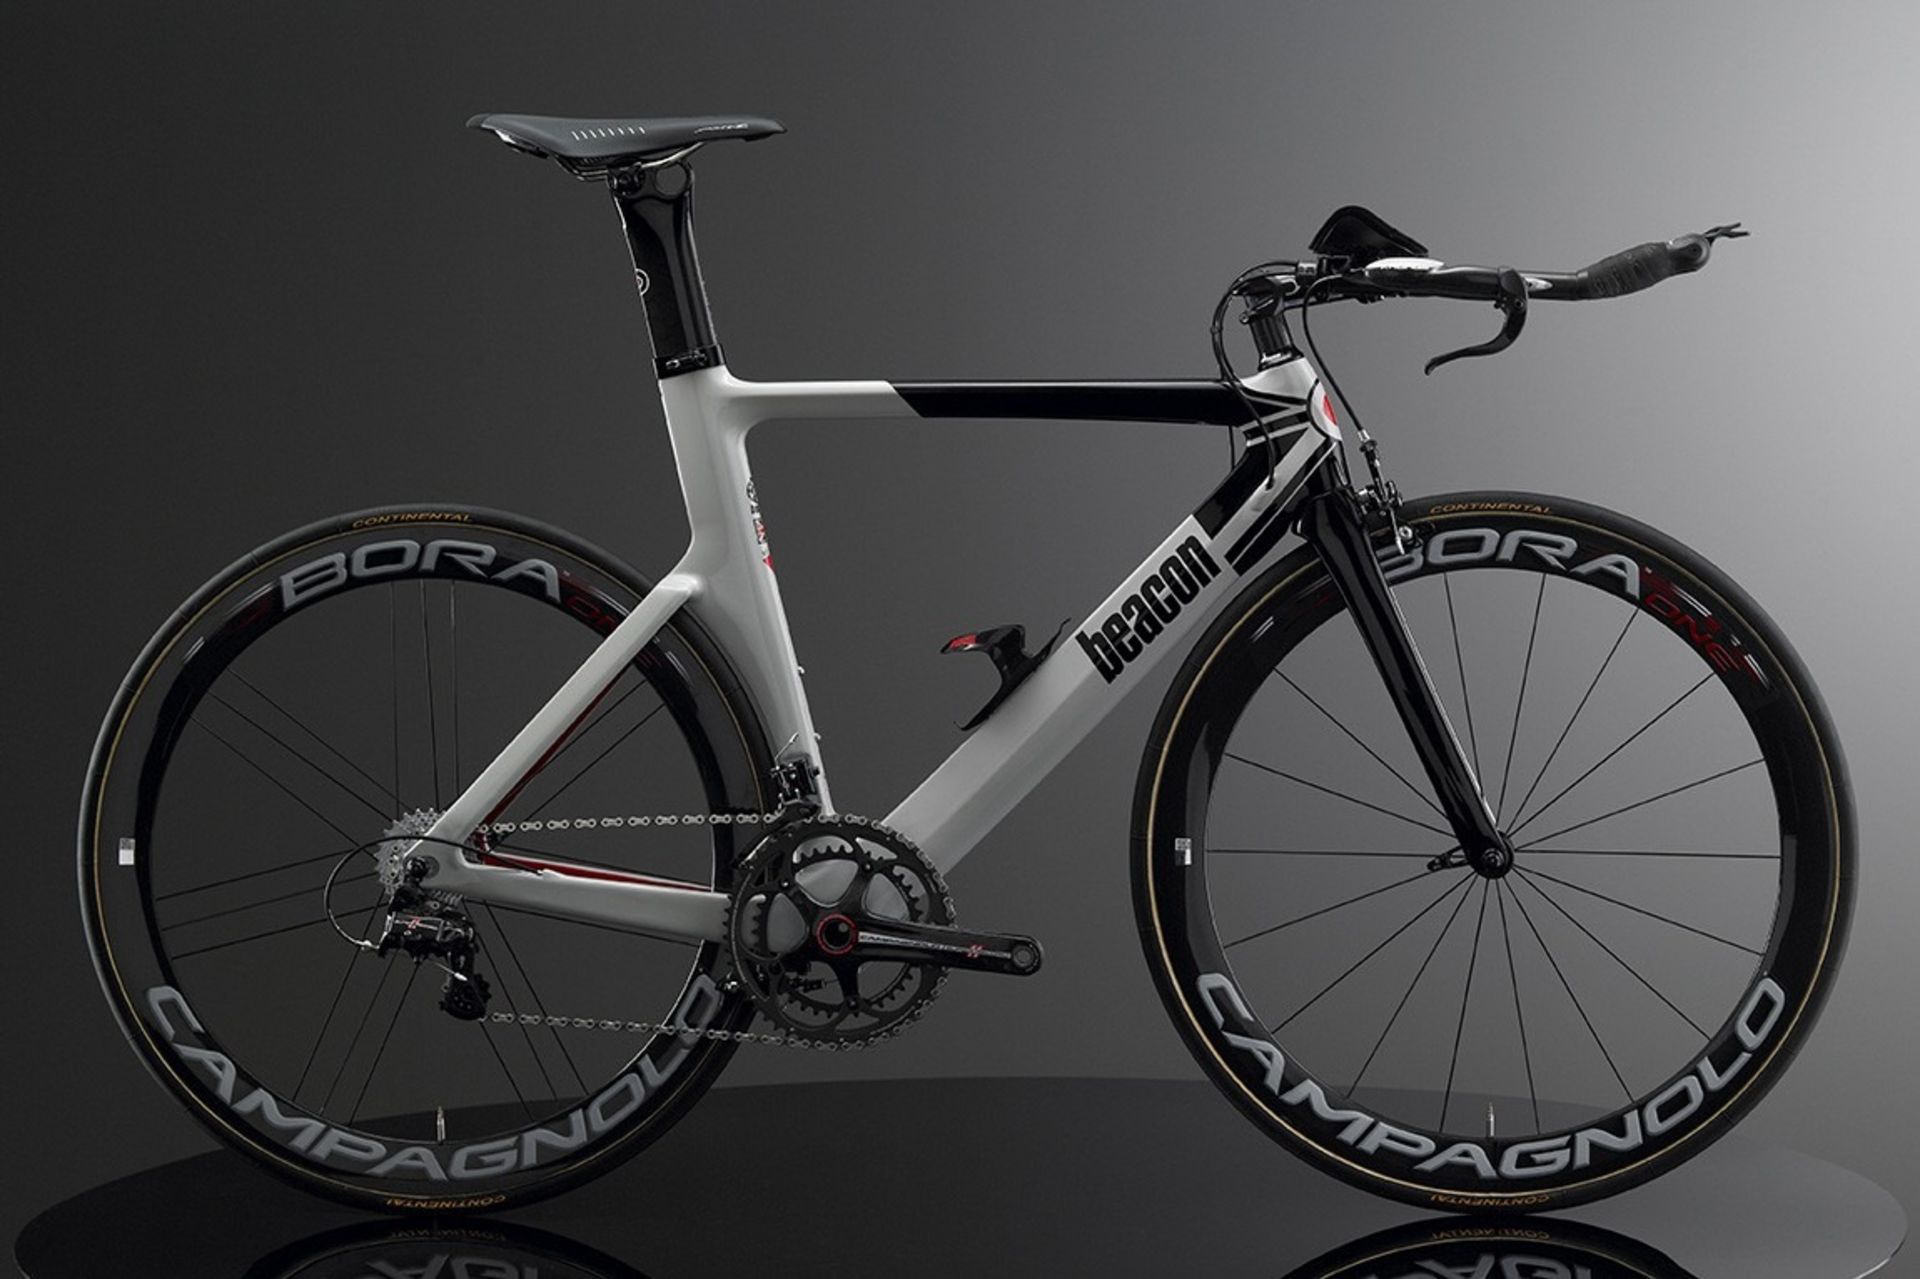 1 x Beacon Model BF-55, Size 560, Carbon Fibre Bike Frame in Grey & Black. - Image 2 of 2